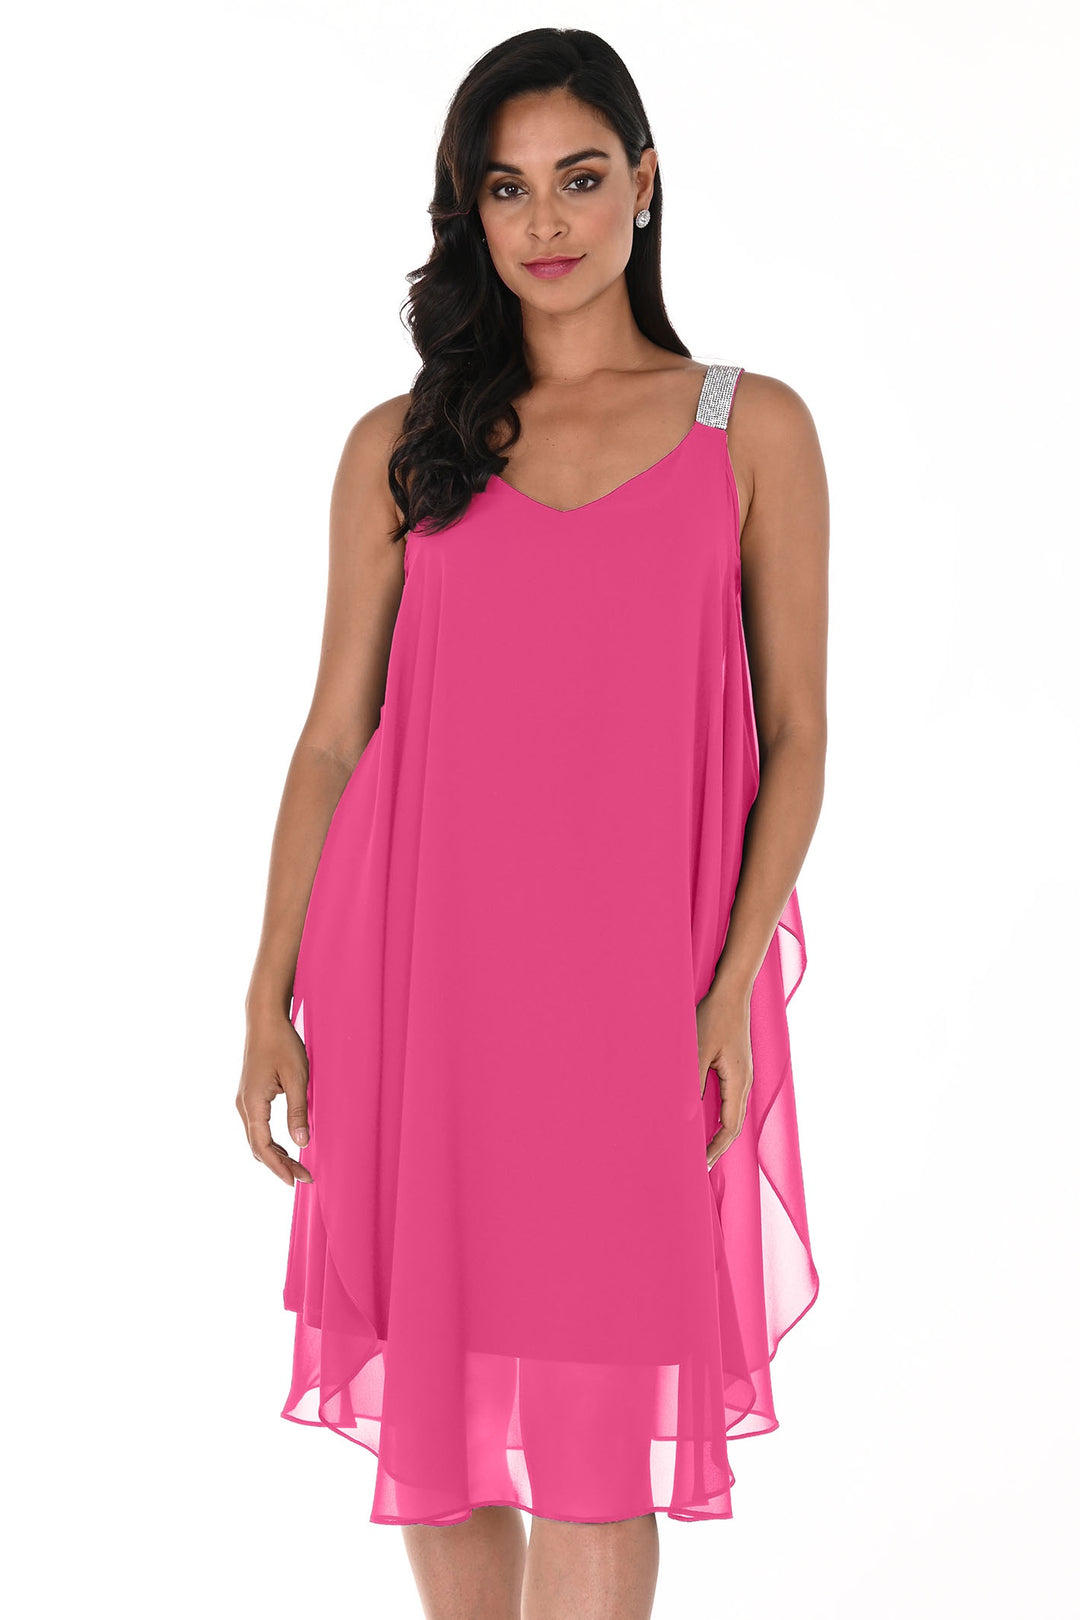 Frank Lyman 248001 Magenta Pink Chiffon Overlay Occasion Dress - Dotique